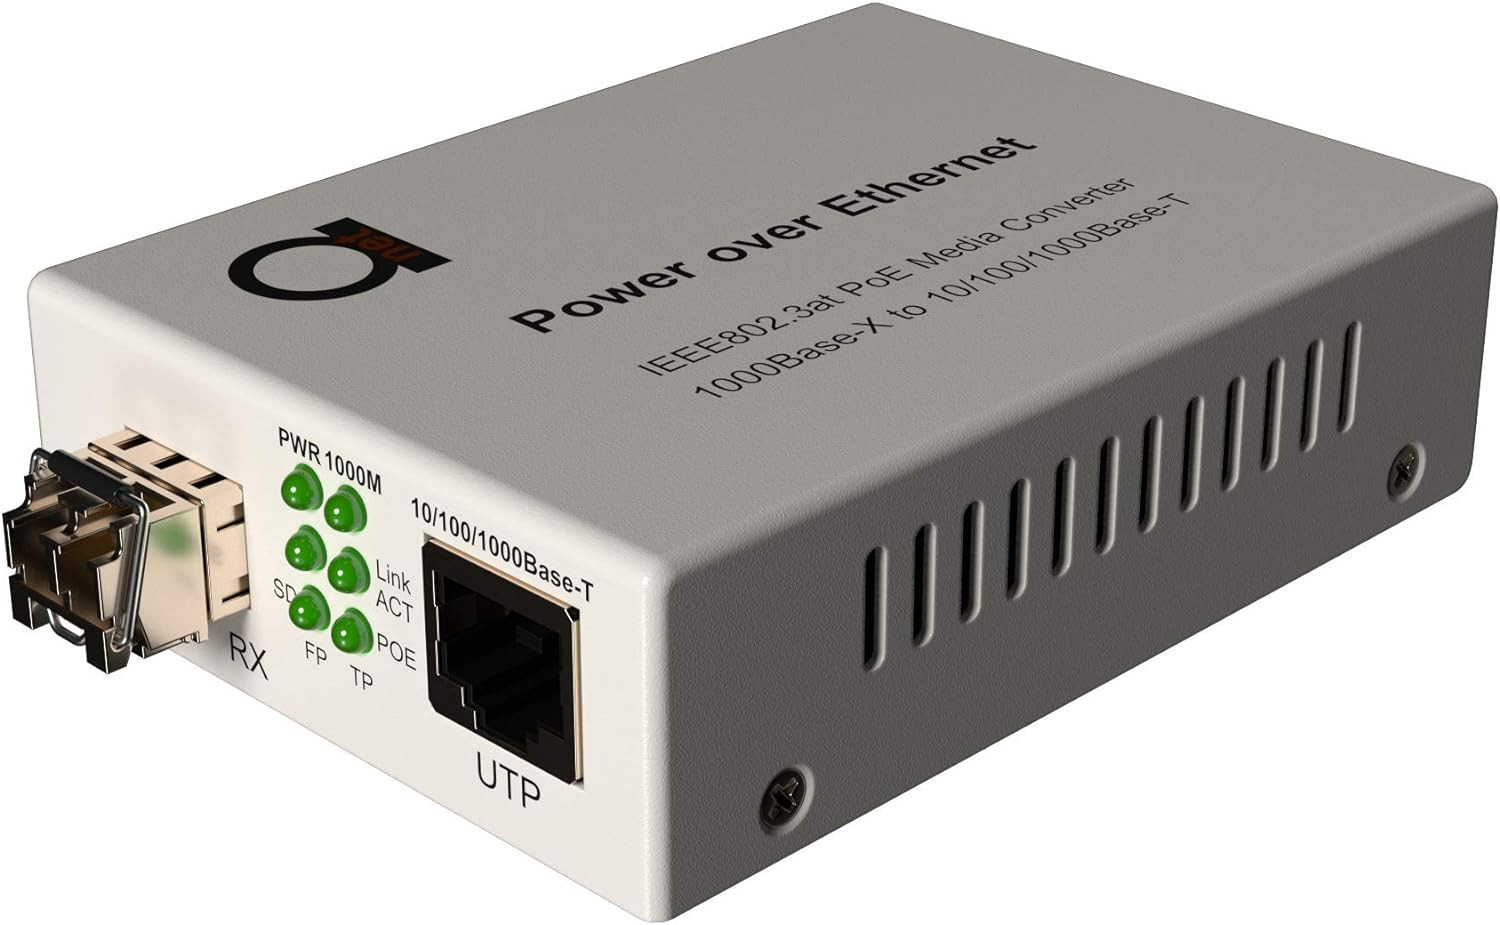 Poe Fiber Multimode LC 850Nm Gigabit Ethernet Media Converter - Supplies IEEE 80